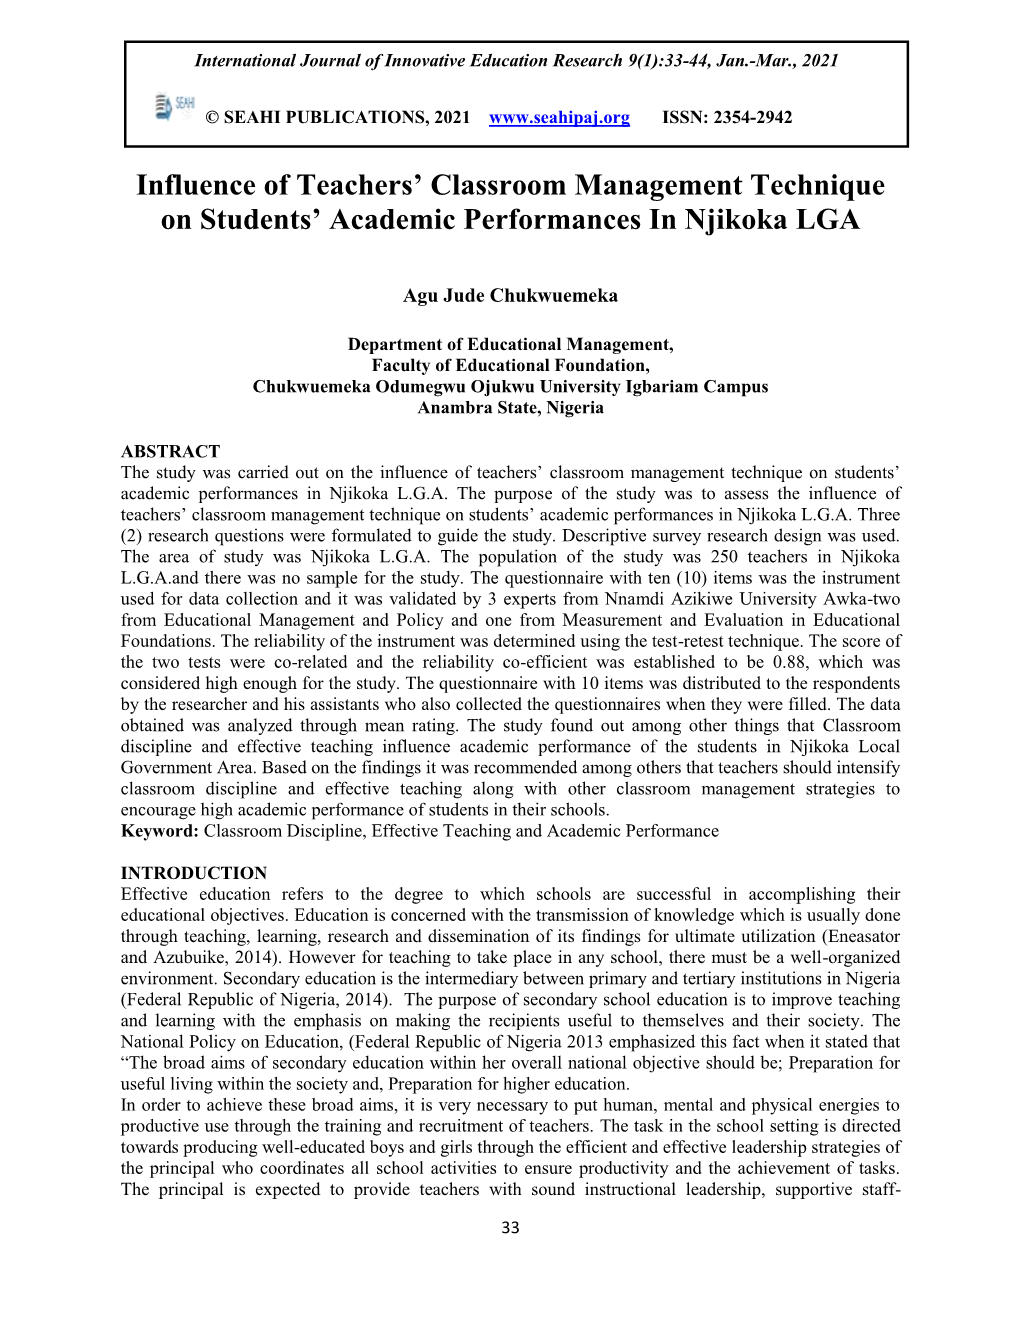 Influence of Teachers' Classroom Management Technique on Students' Academic Performances in Njikoka